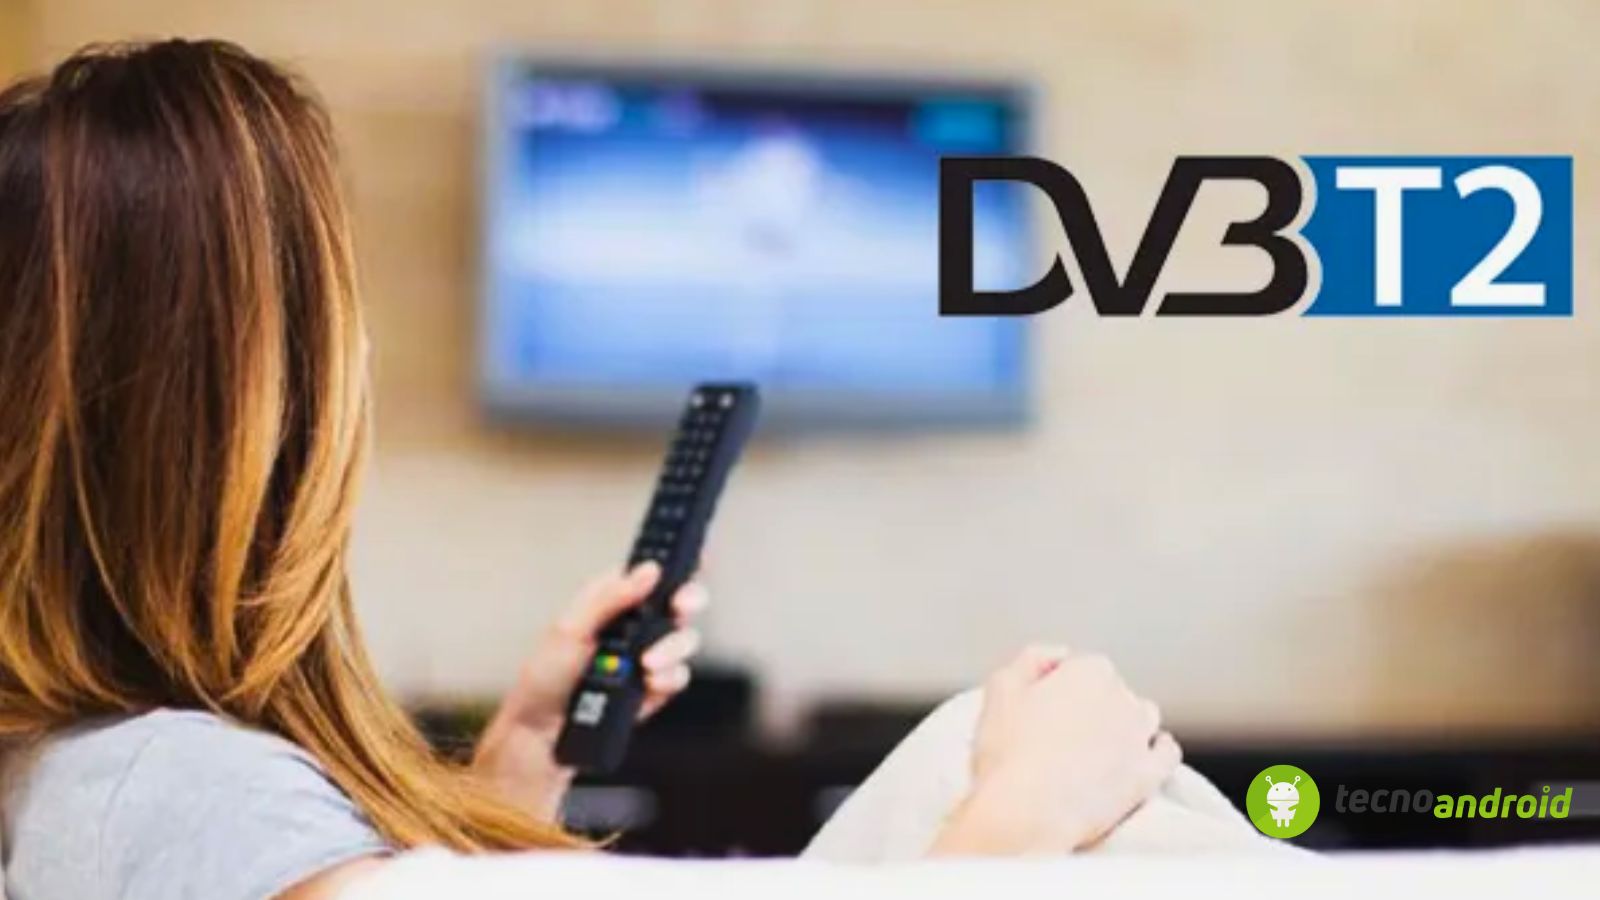 DVB-T2 arrivo a gennaio